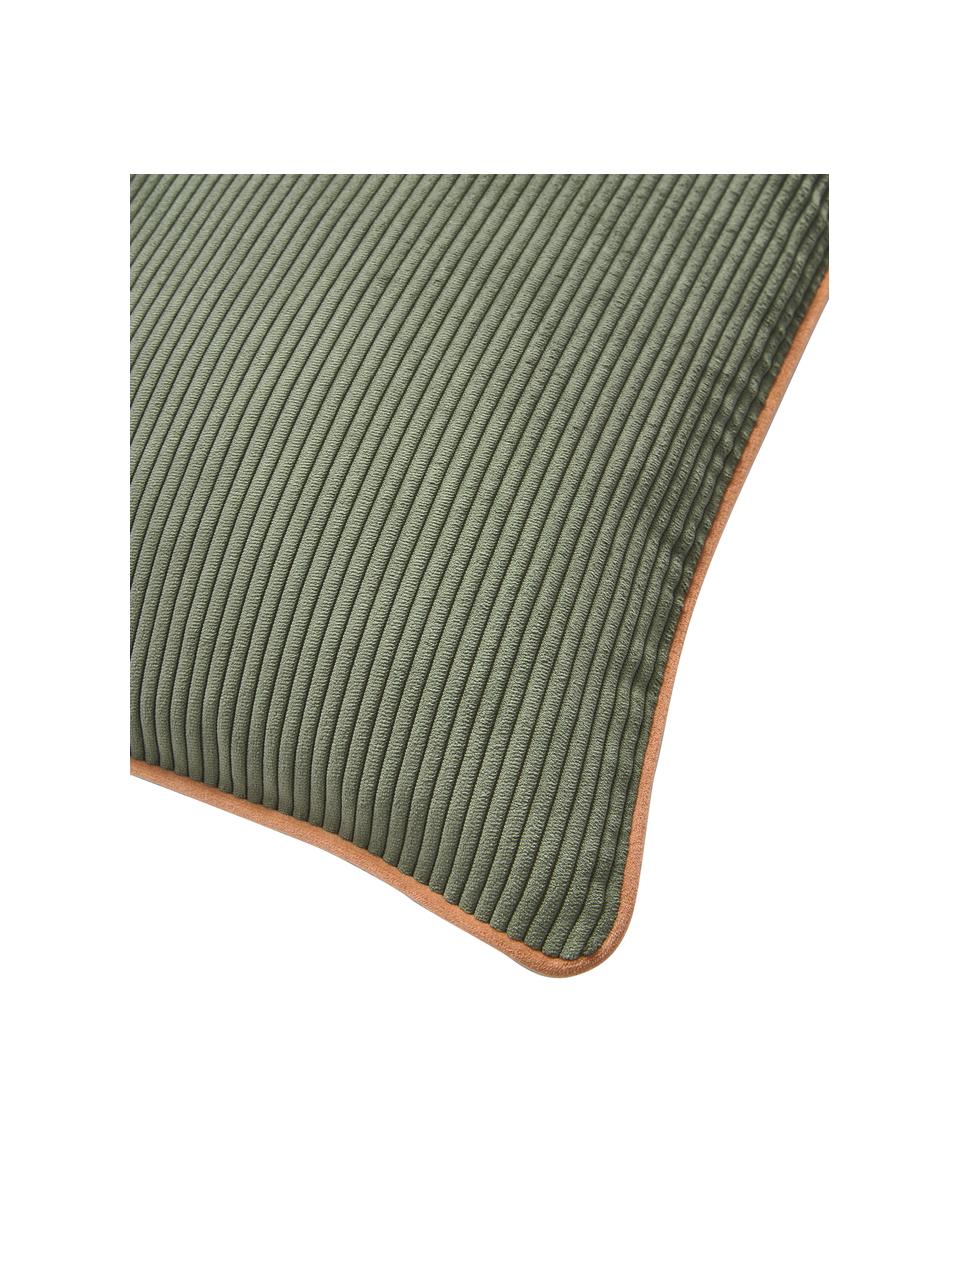 Gewebte Samt-Kissenhüllen Carter mit strukturierter Oberfläche, 2 Stück, 88 % Polyester, 12 % Nylon, Grün, Orange, B 45 x L 45 cm